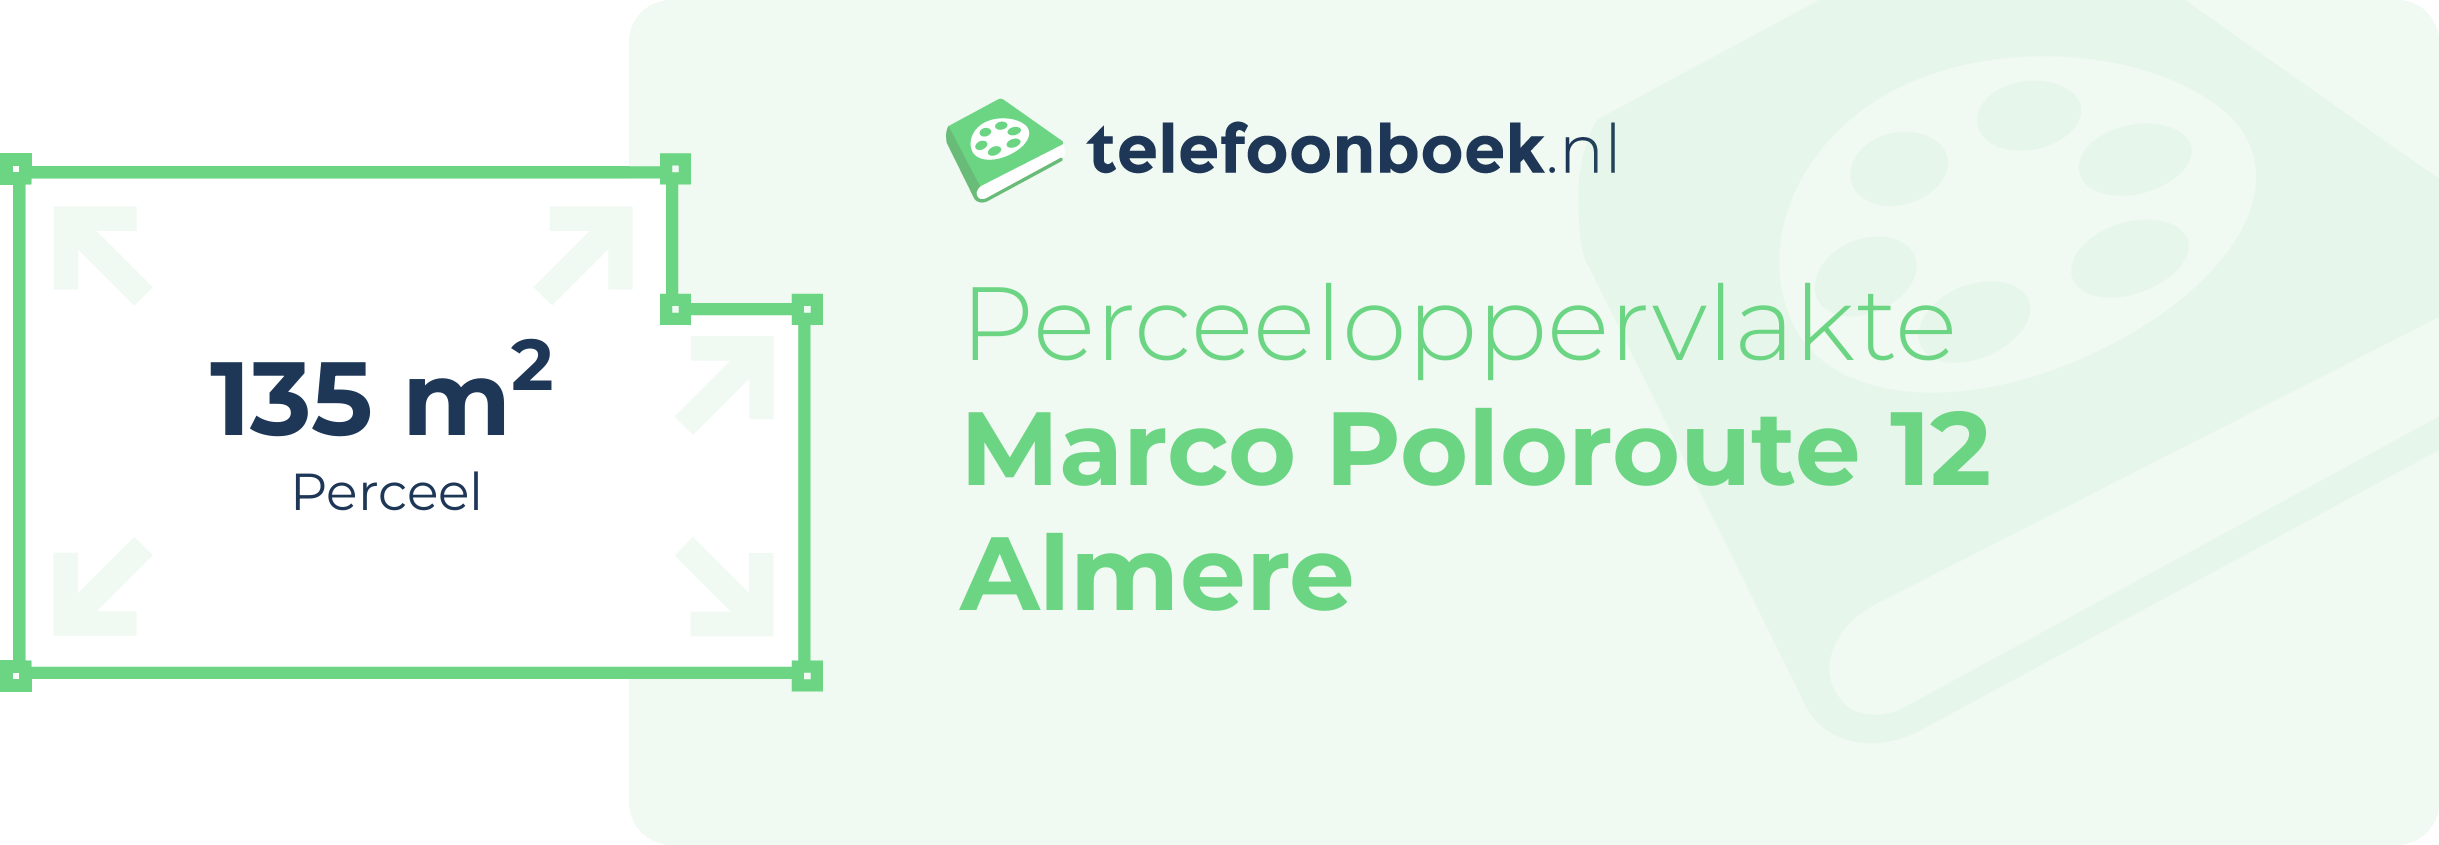 Perceeloppervlakte Marco Poloroute 12 Almere